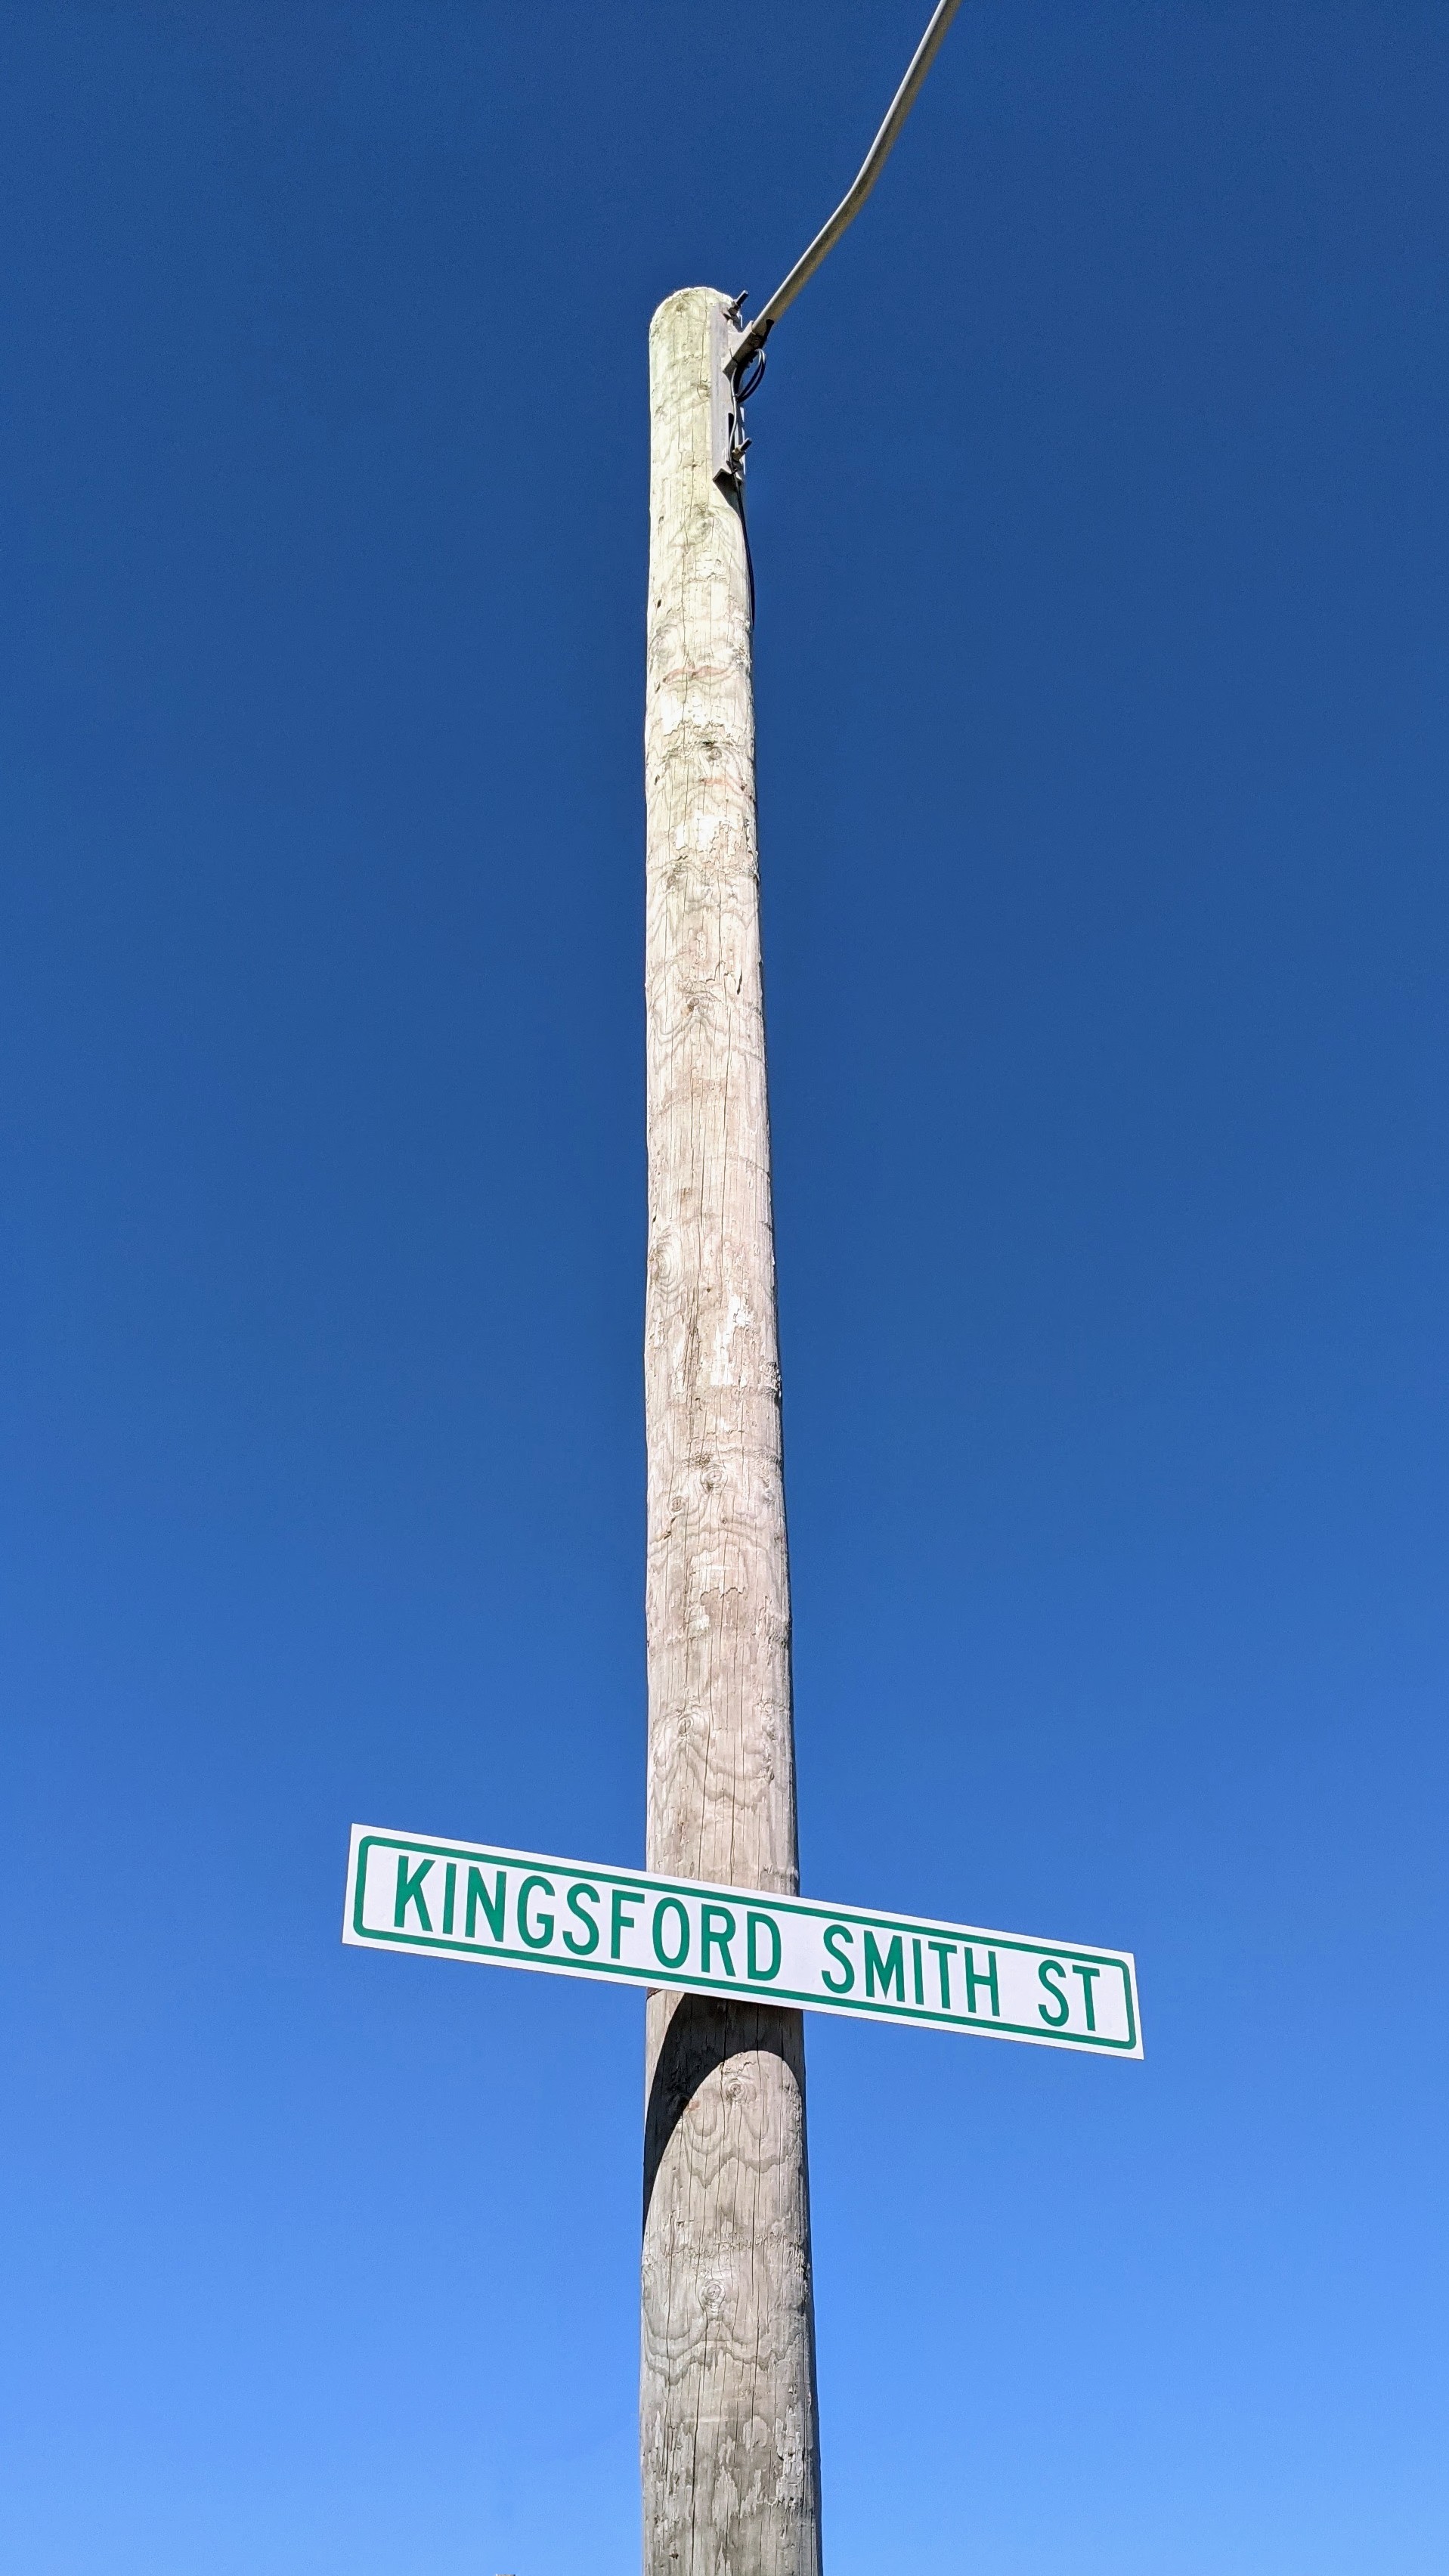 Kingsford Smith Street sign on a very tall post against a blue summer sky